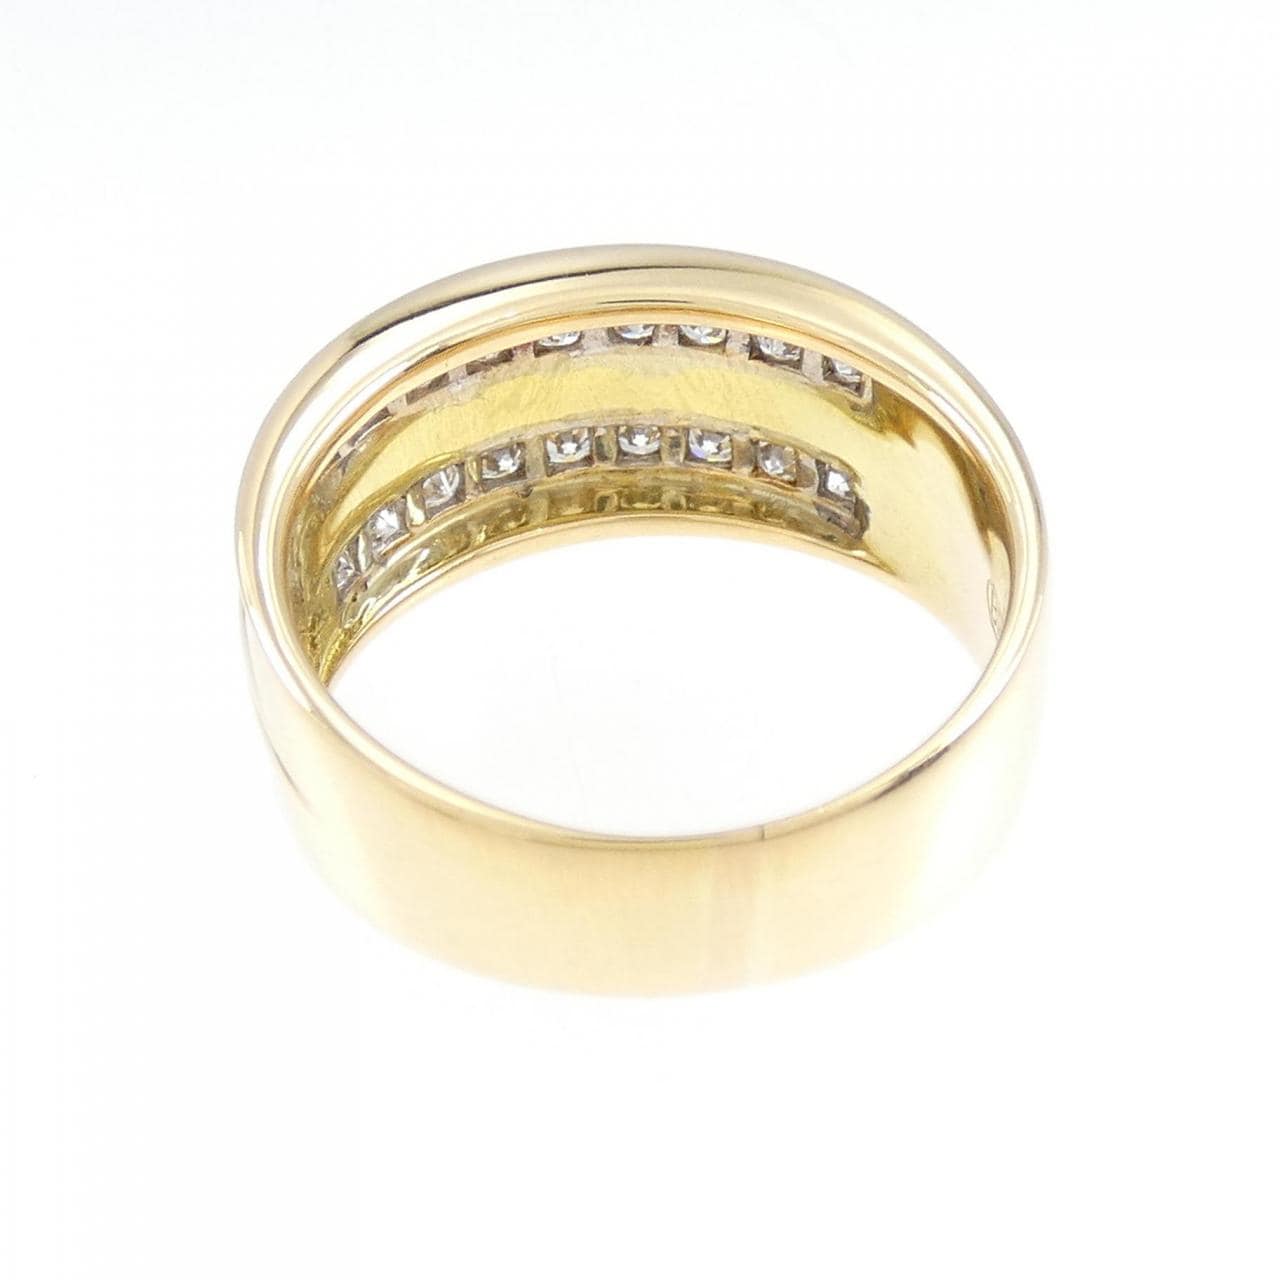 K18YG/K18WG Diamond ring 0.44CT